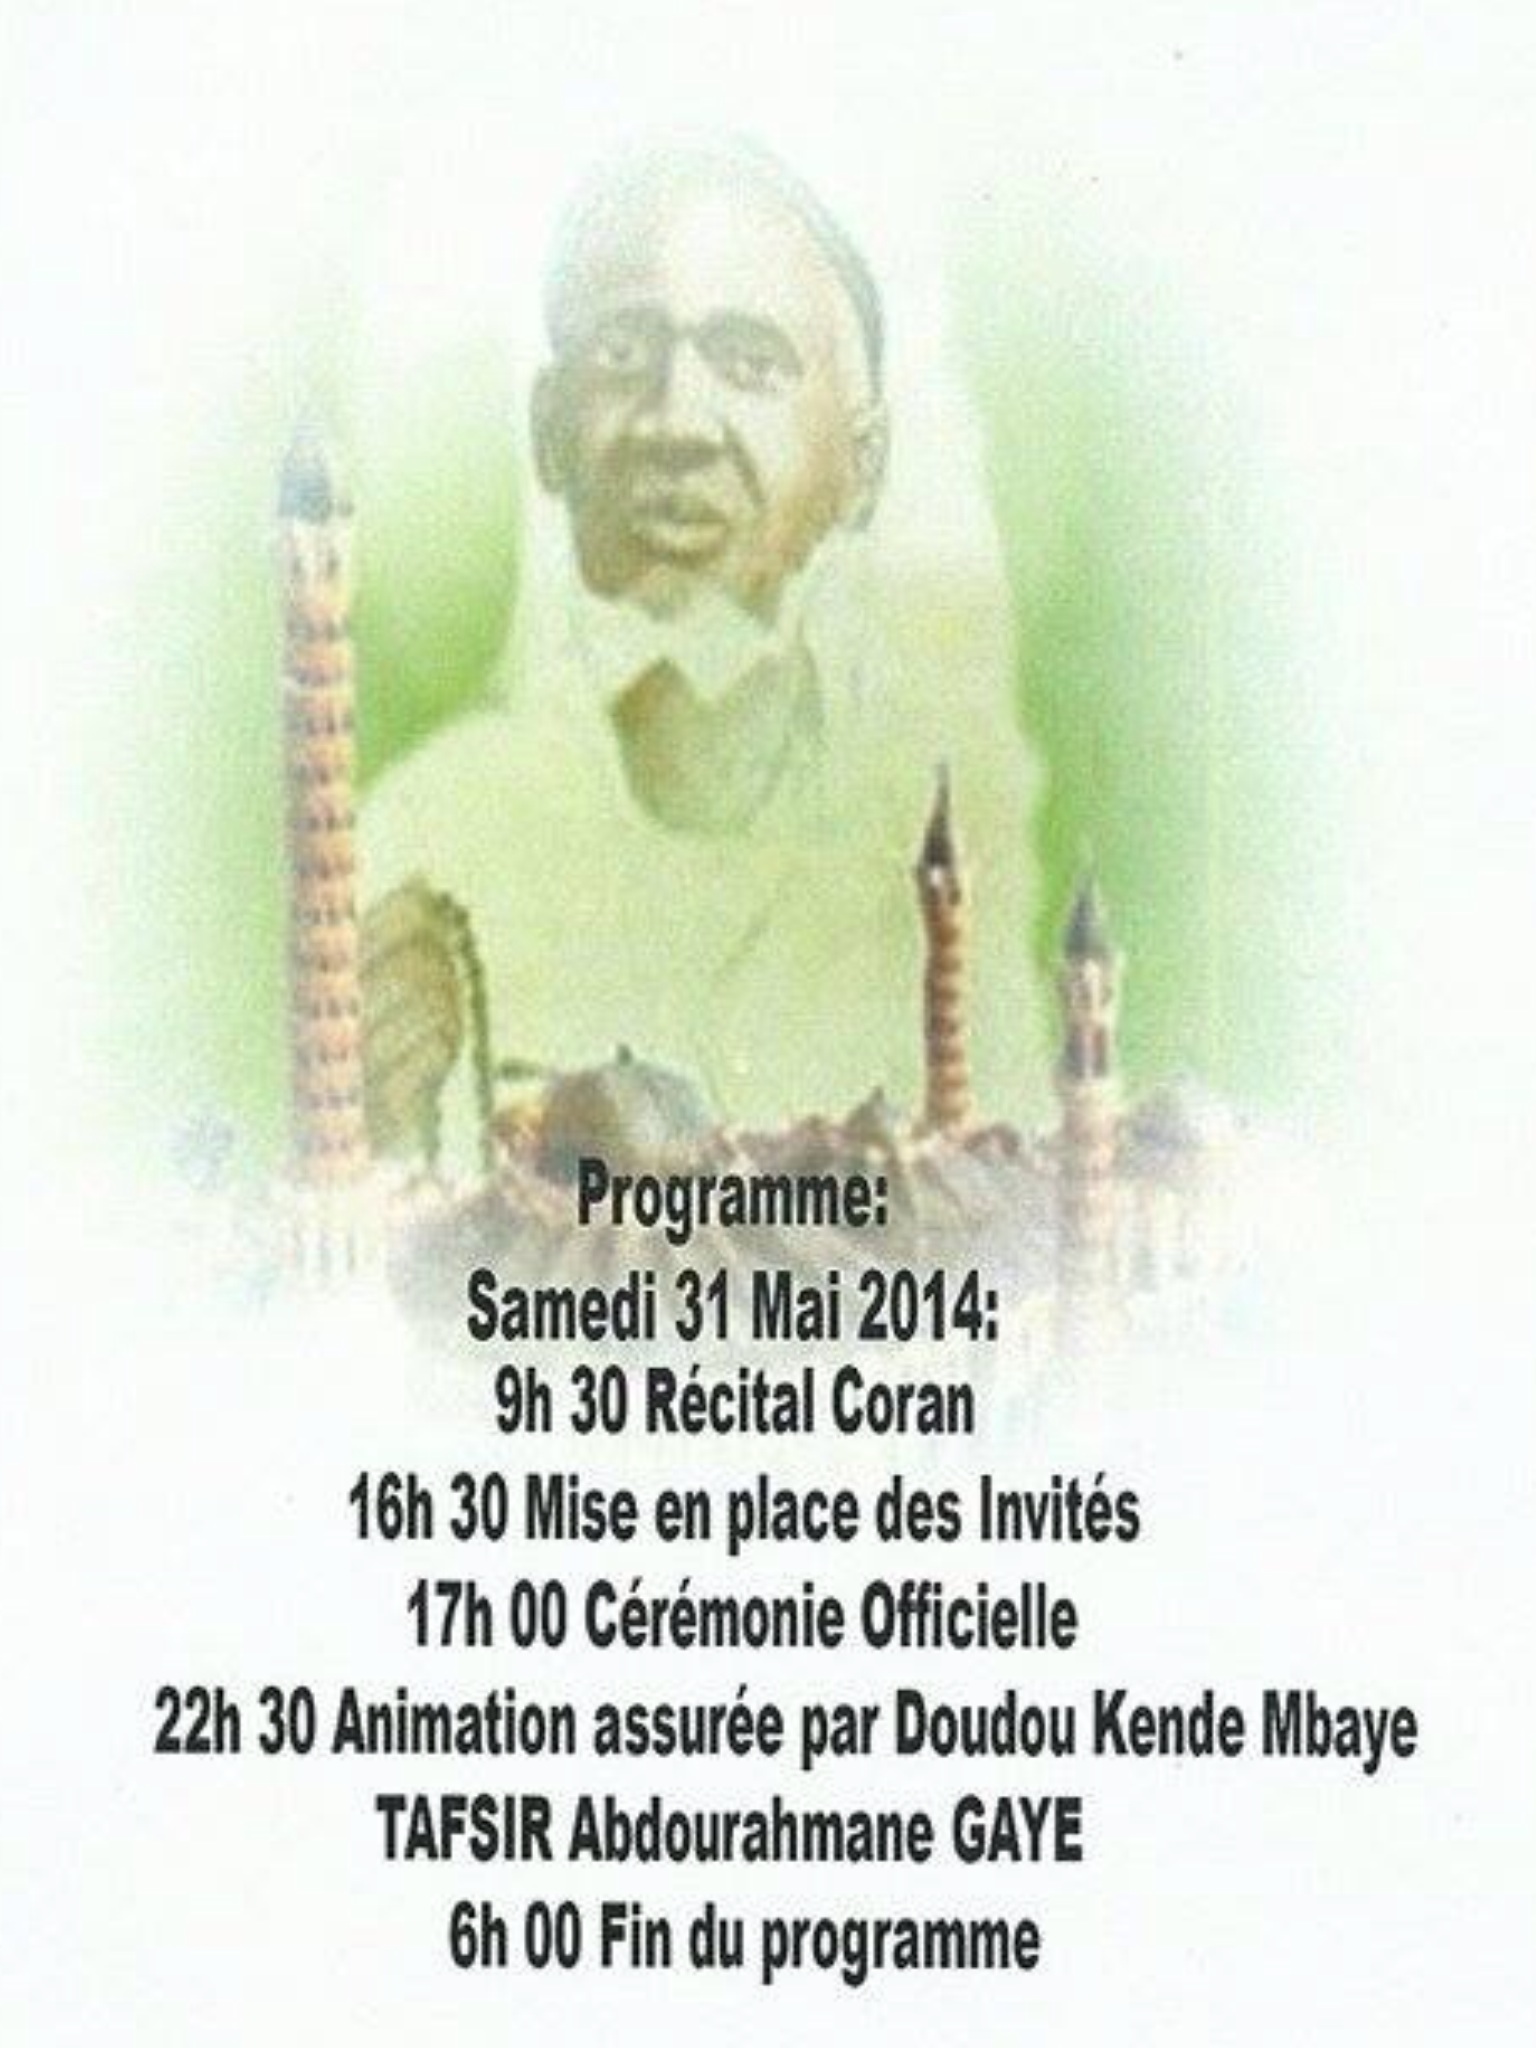 SEBIKOTANE: Gamou du Dahira Moutahabina Filahi , Samedi 31 Mai 2014 , sous la présence effective de Serigne Mame Malick Sy Mansour et Serigne Cheikh Tidiane Tall 